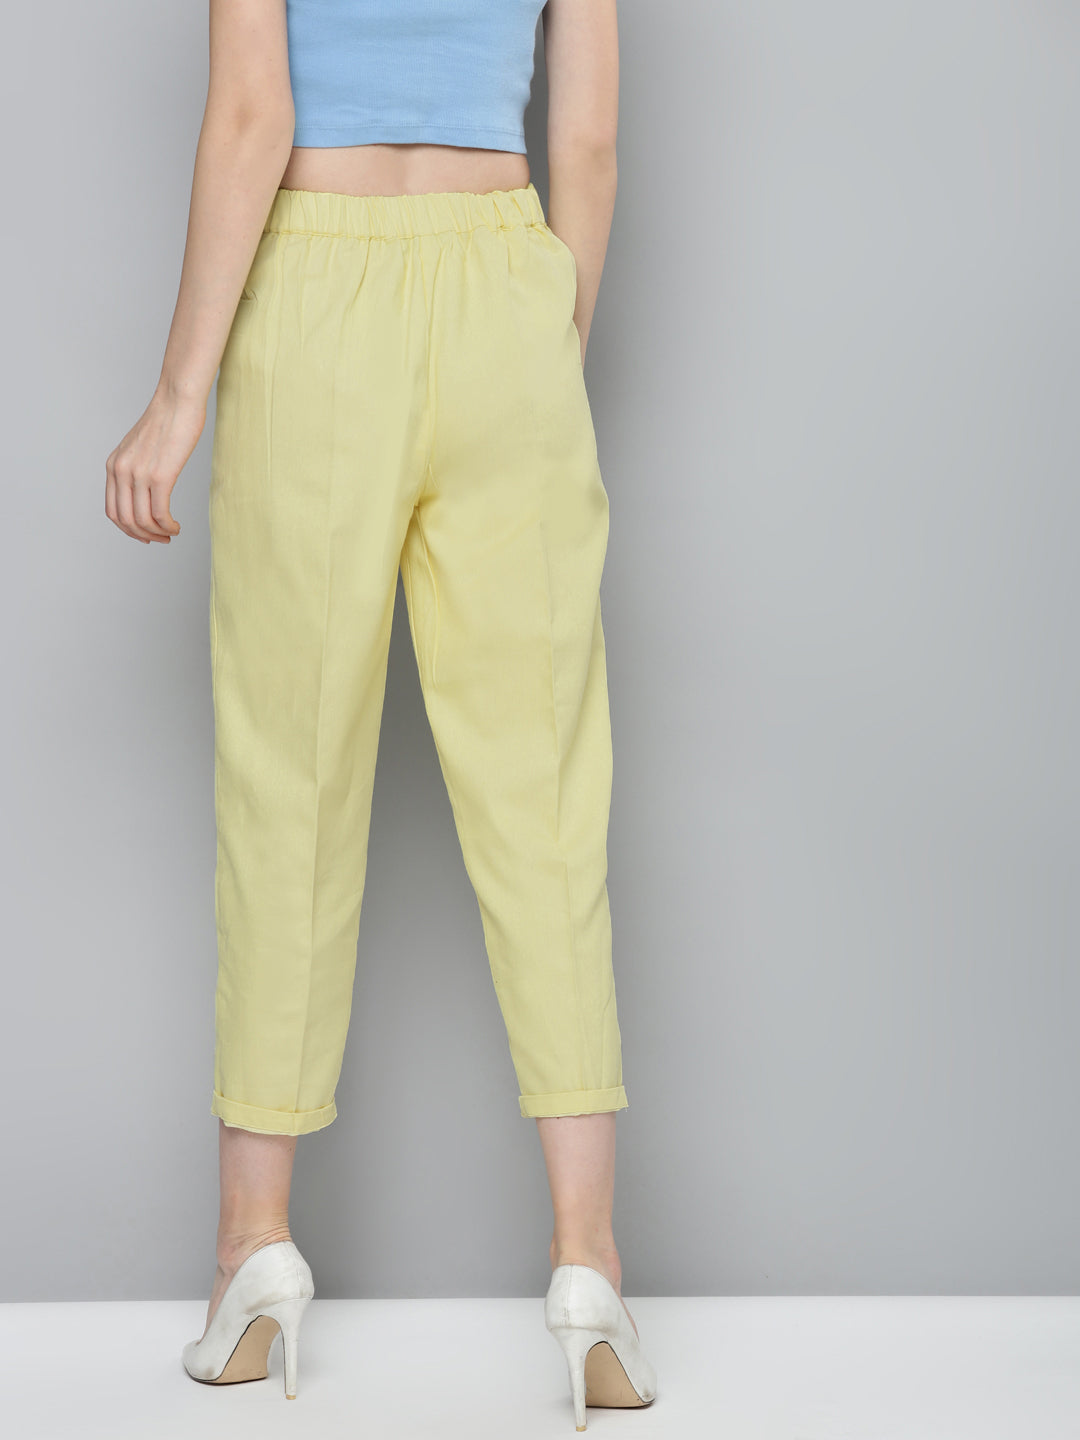 shop online Luminescent Piping Cargo Pants Zipper Multi Pockets Drawstring  Elastic Waist Casual Pants DRESSLILY GenderMaleSizeXLColorLIGHT  YELLOW